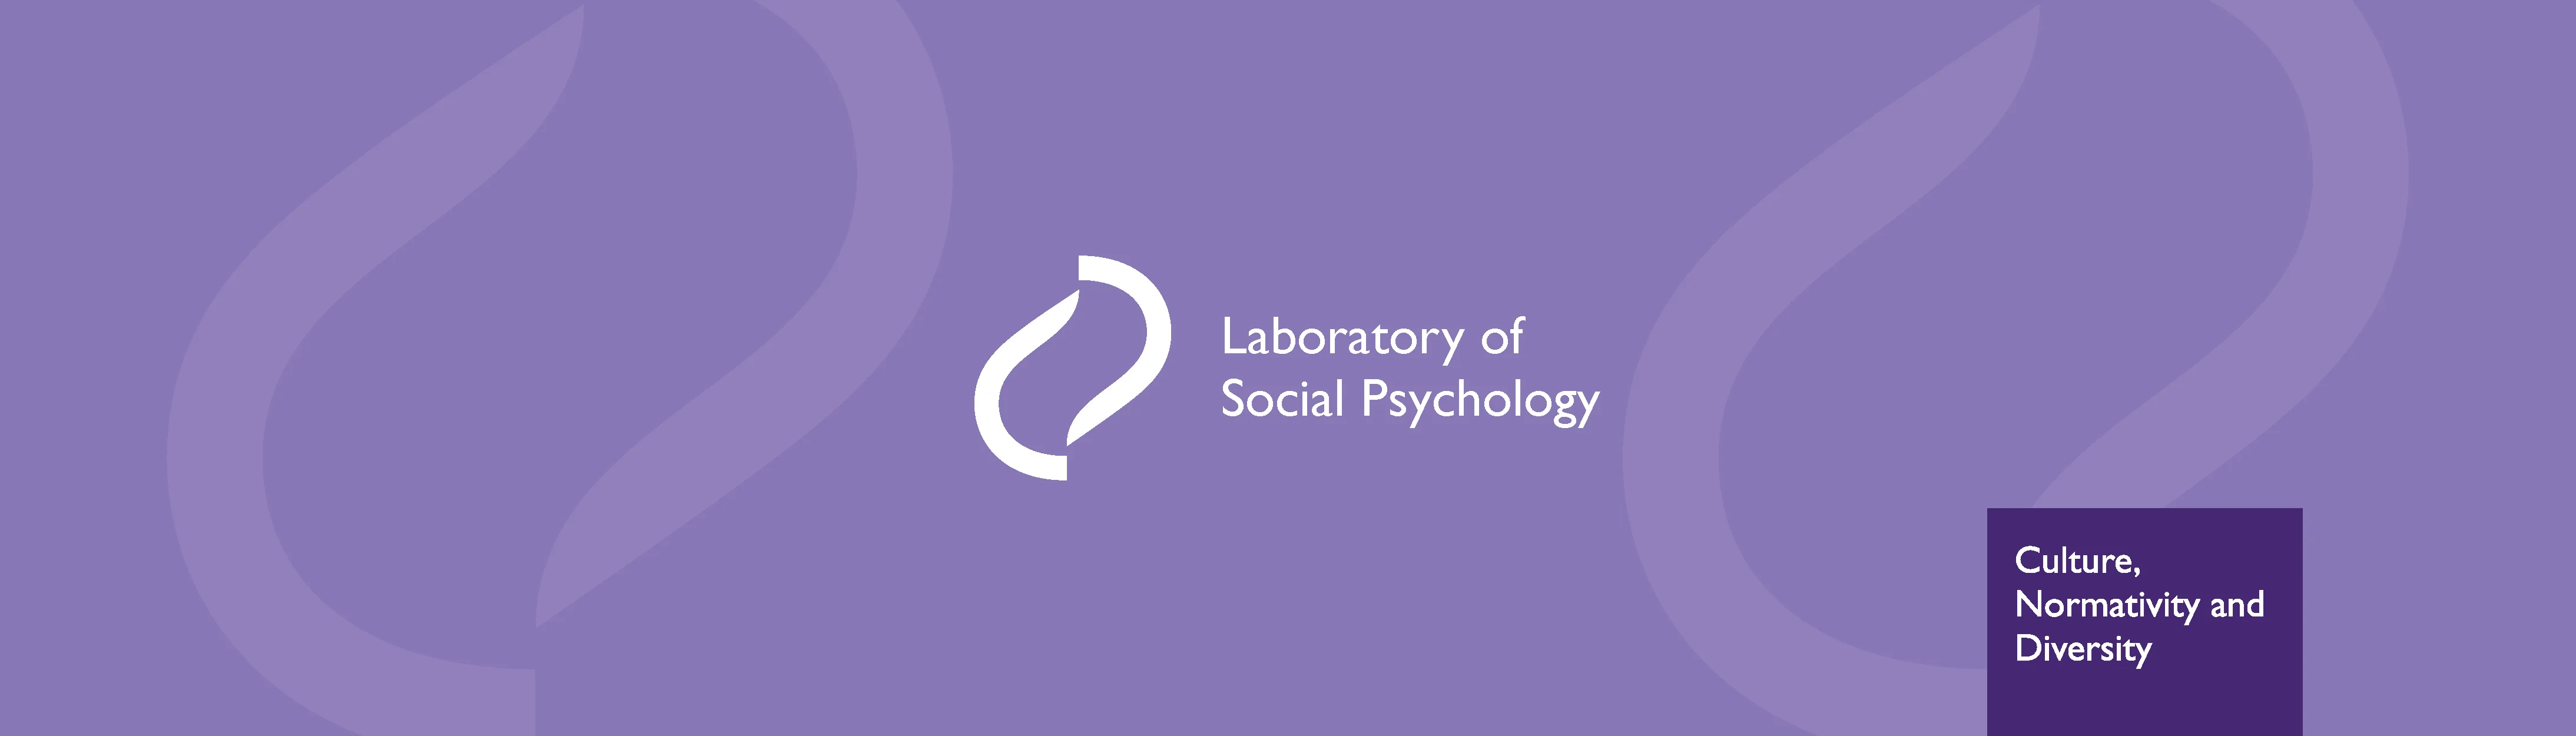 Laboratory of Social Psychology logo